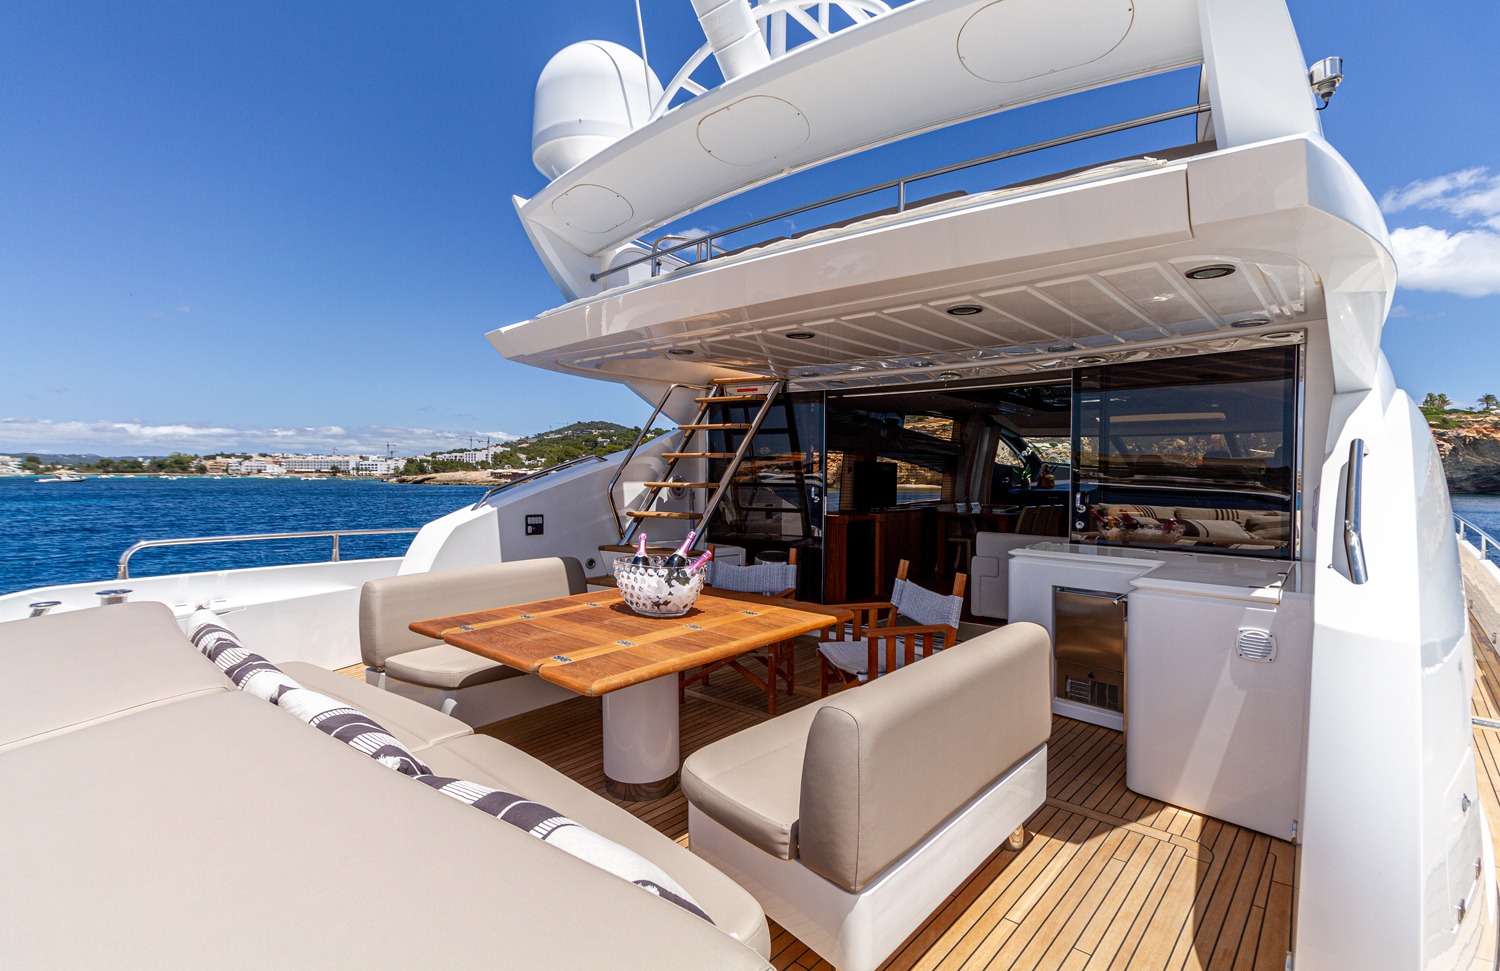 Basad-Sunseeker-Yacht-For-Charter-In-Ibiza-Al-Fresco-Dining